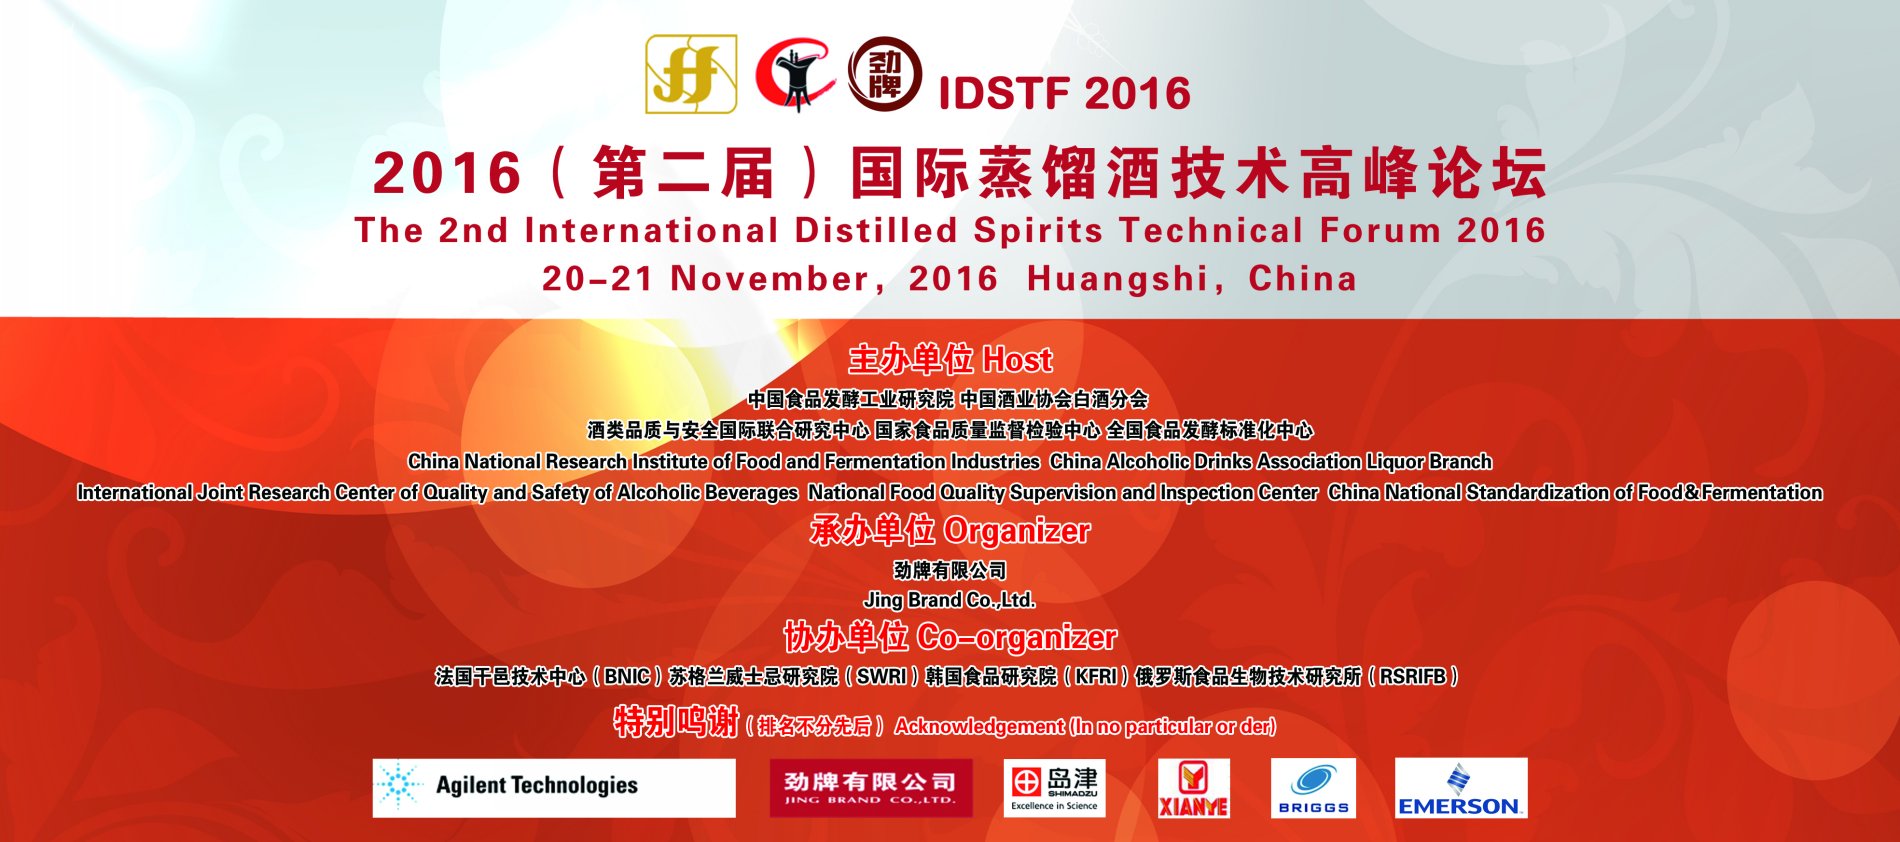 The 2nd International Distilled Spirits Technical Forum (IDSTF) 2016